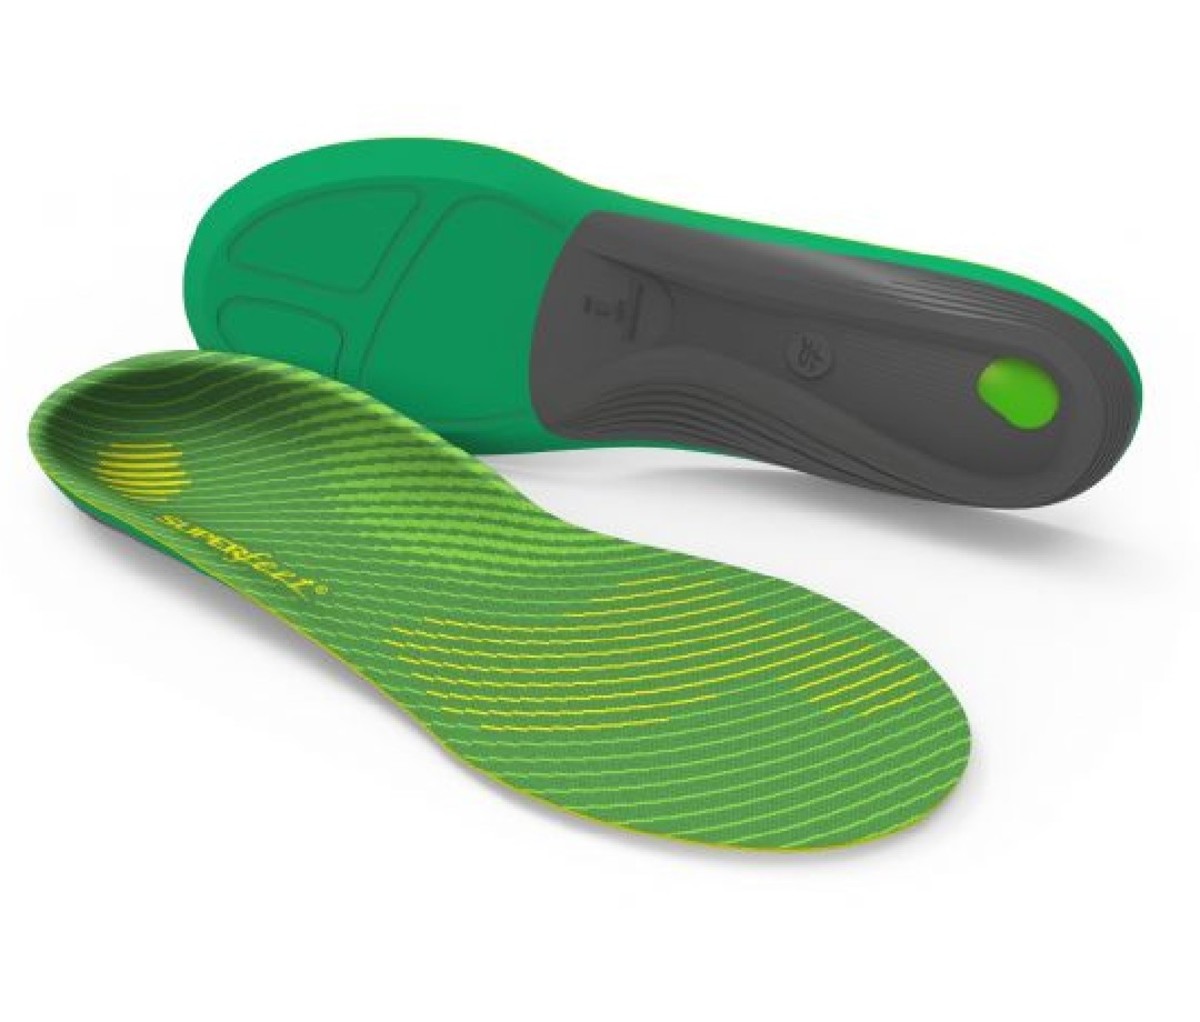 Green pair of Superfeet Run Comfort Inserts